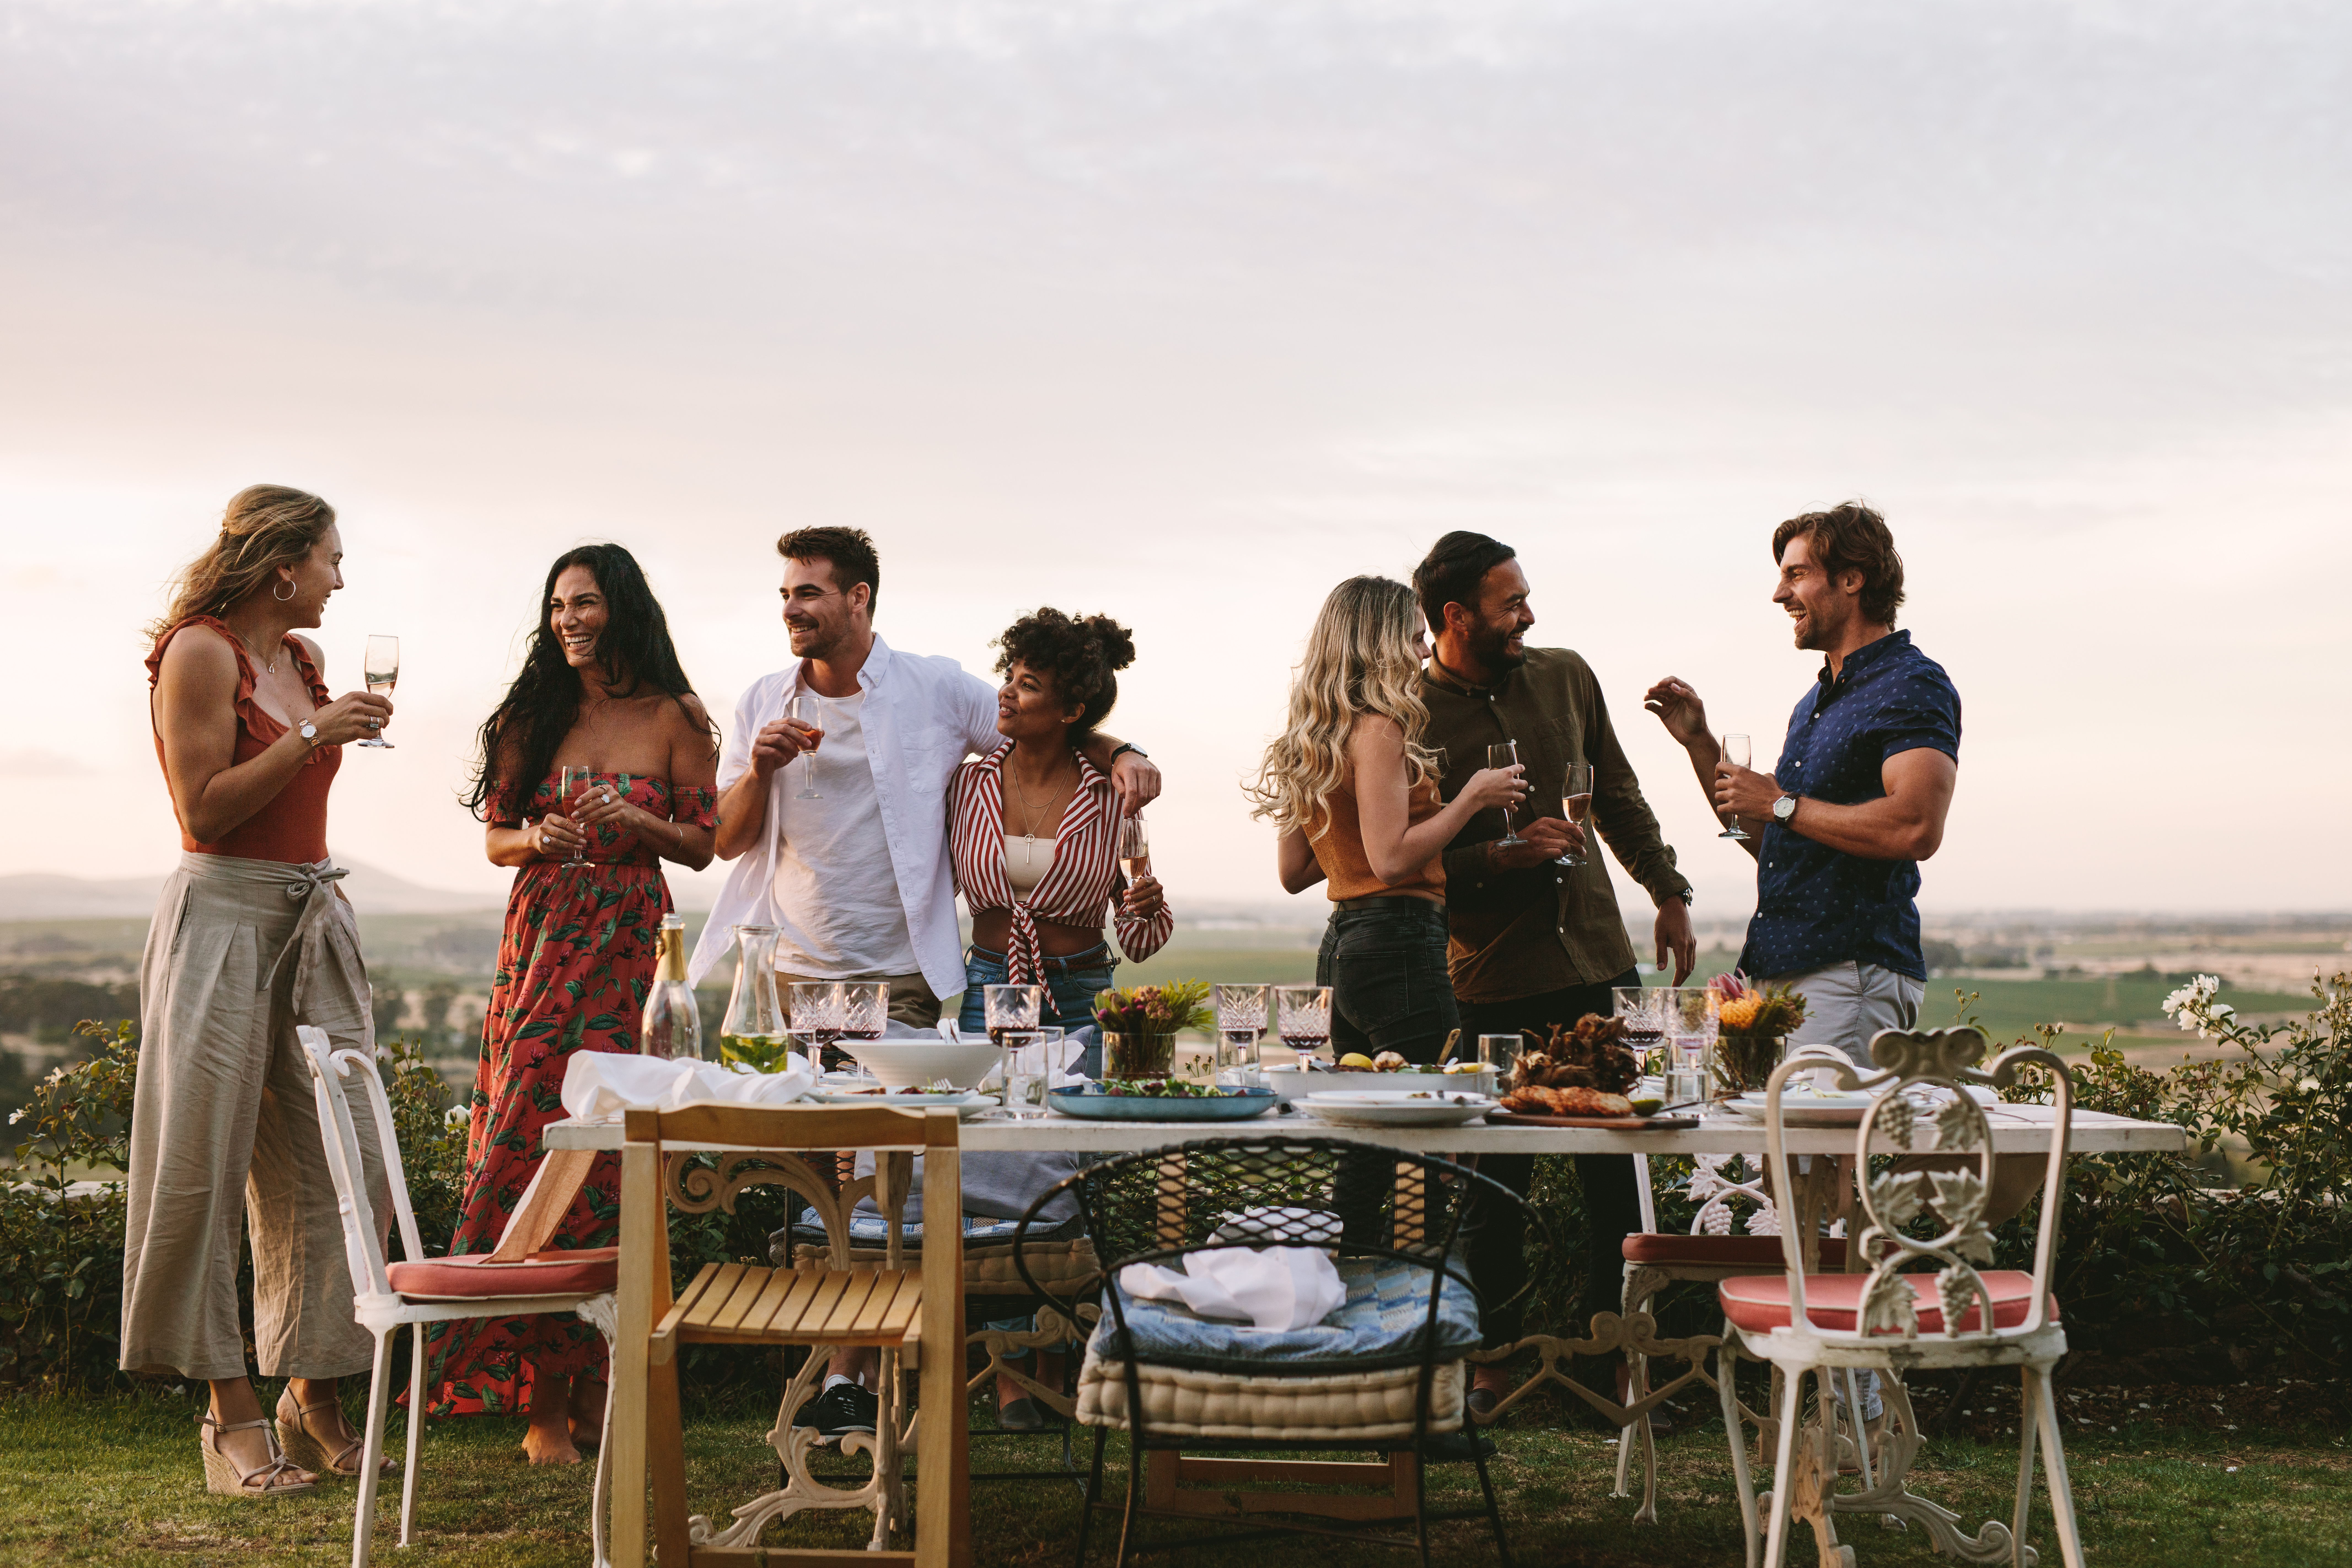 A dinner party | Source: Shutterstock